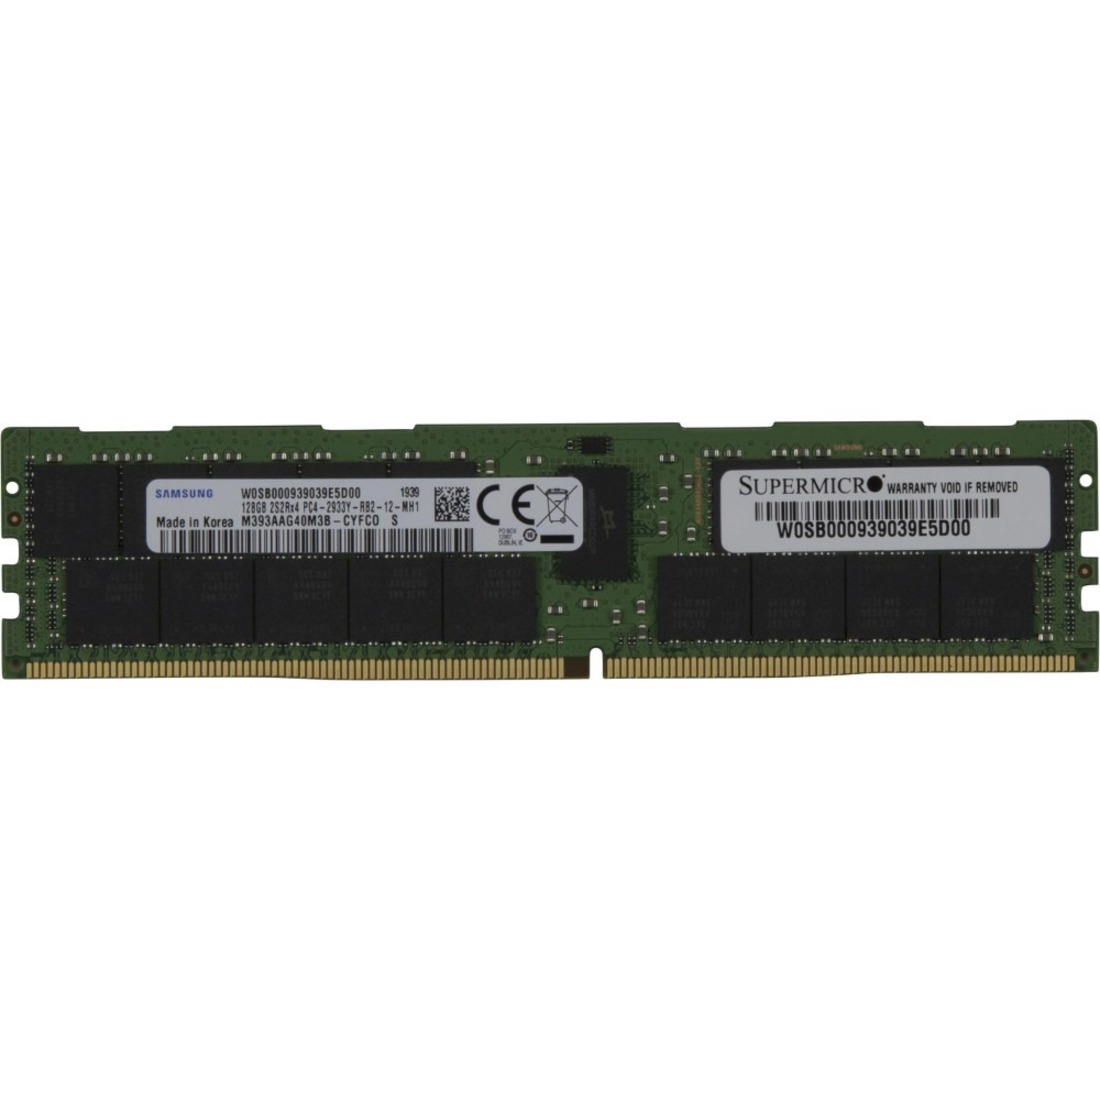 Supermicro 128GB DDR4 SDRAM Memory Module - For Server